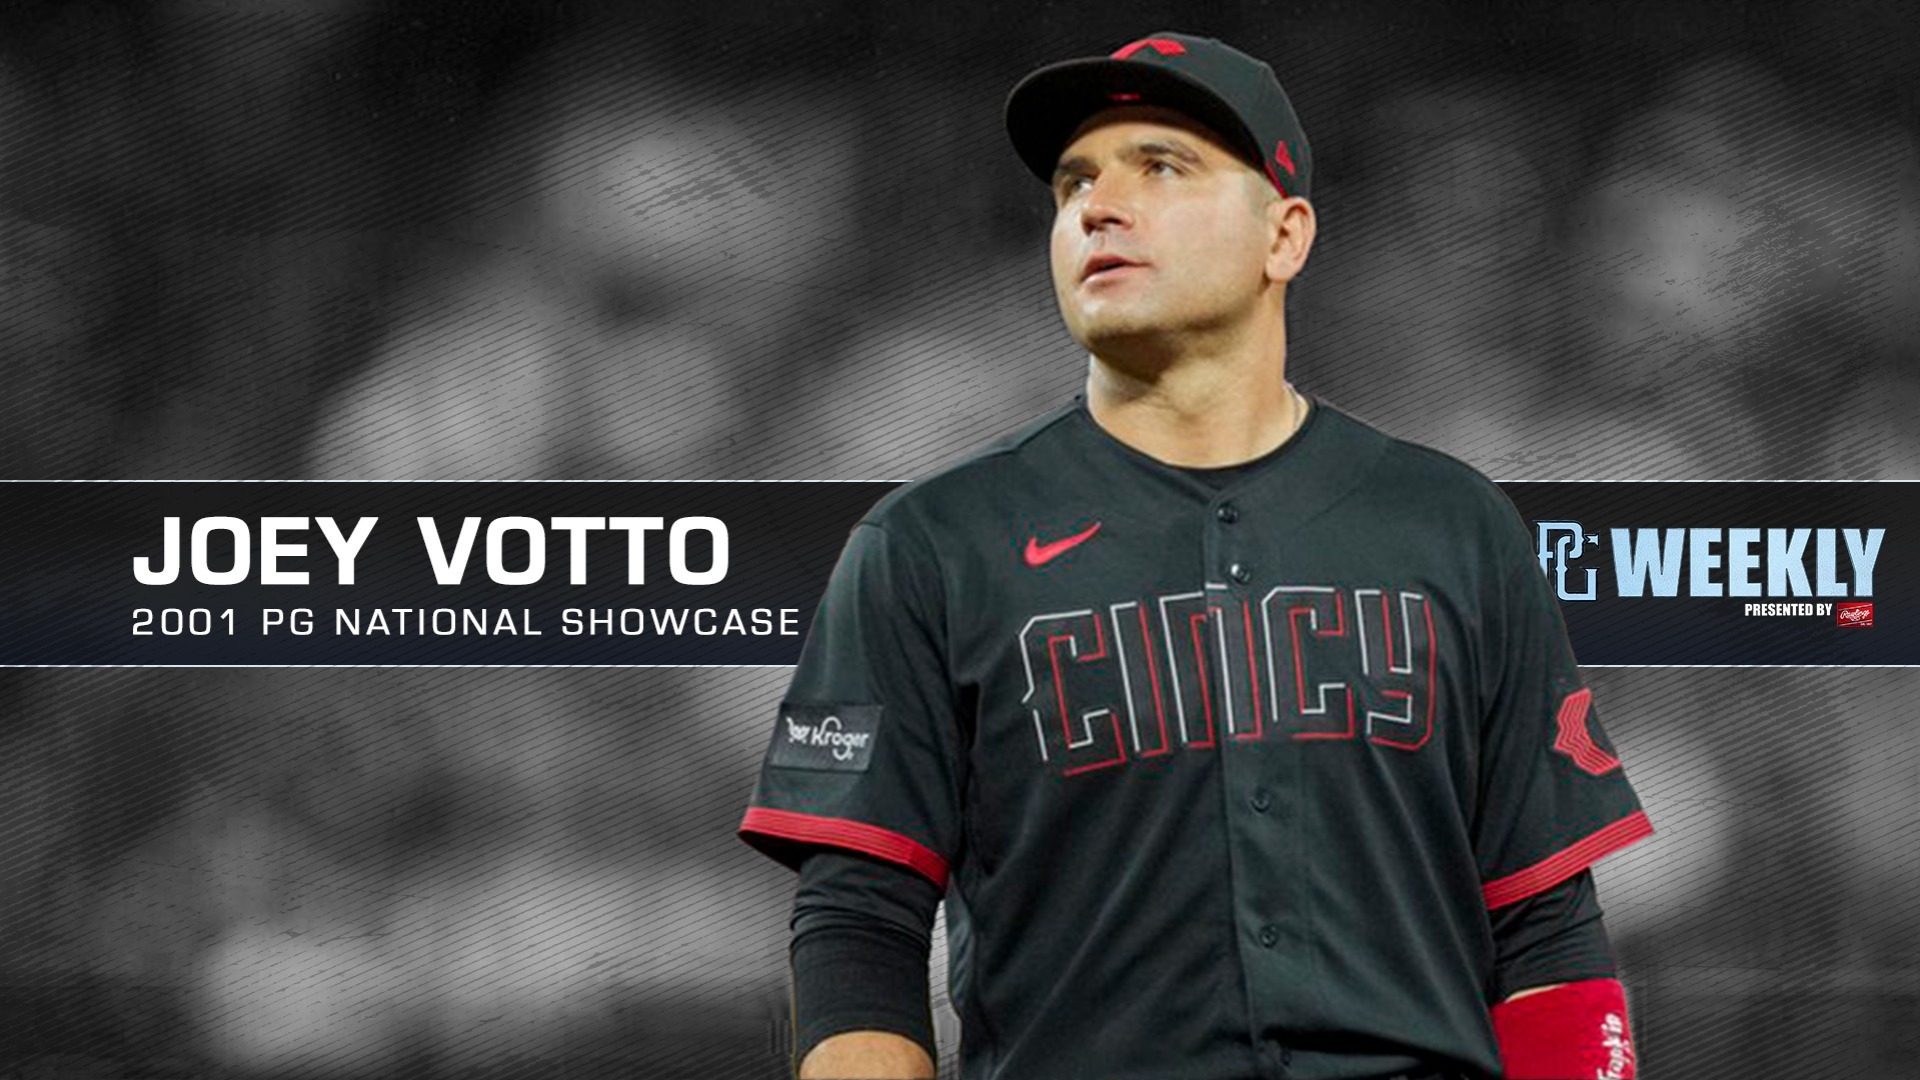 6x MLB All-Star Joey Votto